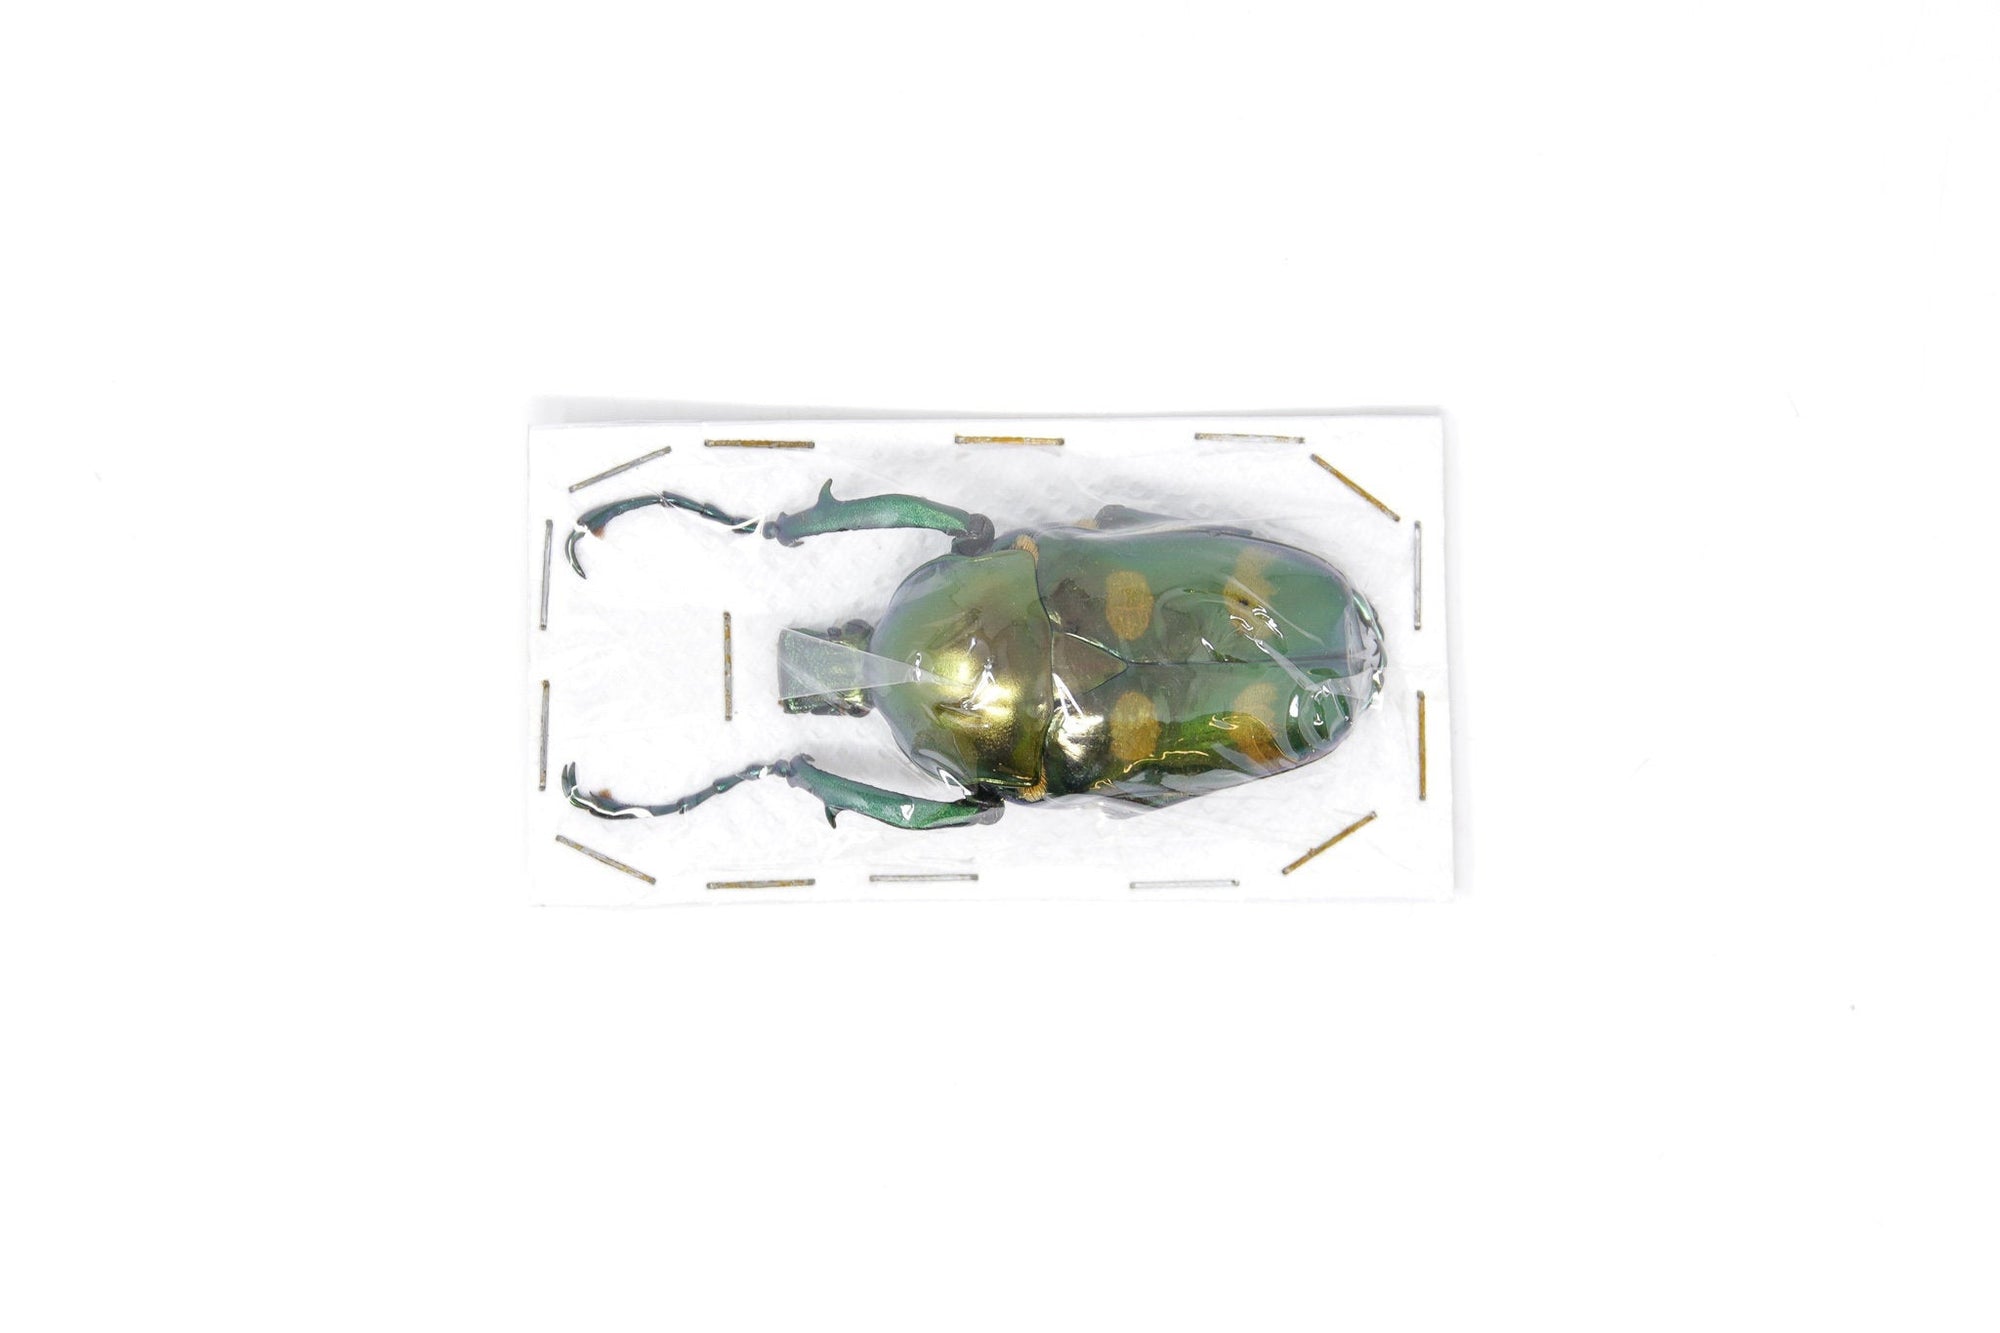 Jumnos ruckeri ruckeri 51mm A1 | Thailand Flower Beetle, Entomology Specimen